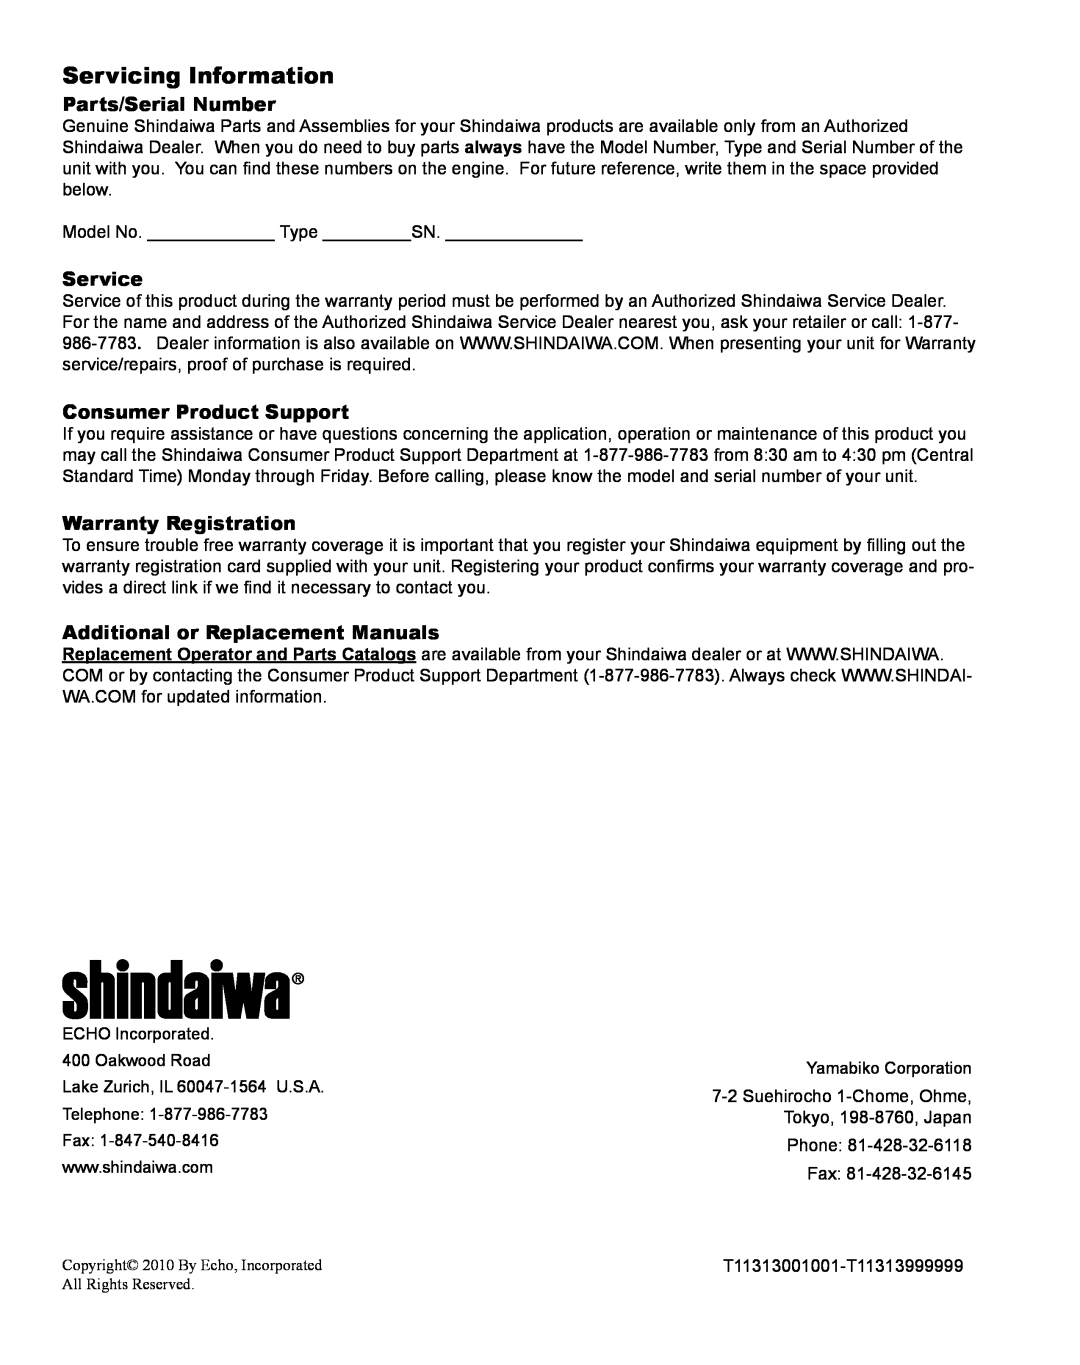 Shindaiwa HT254EF Servicing Information, Parts/Serial Number, Service, Consumer Product Support, Warranty Registration 